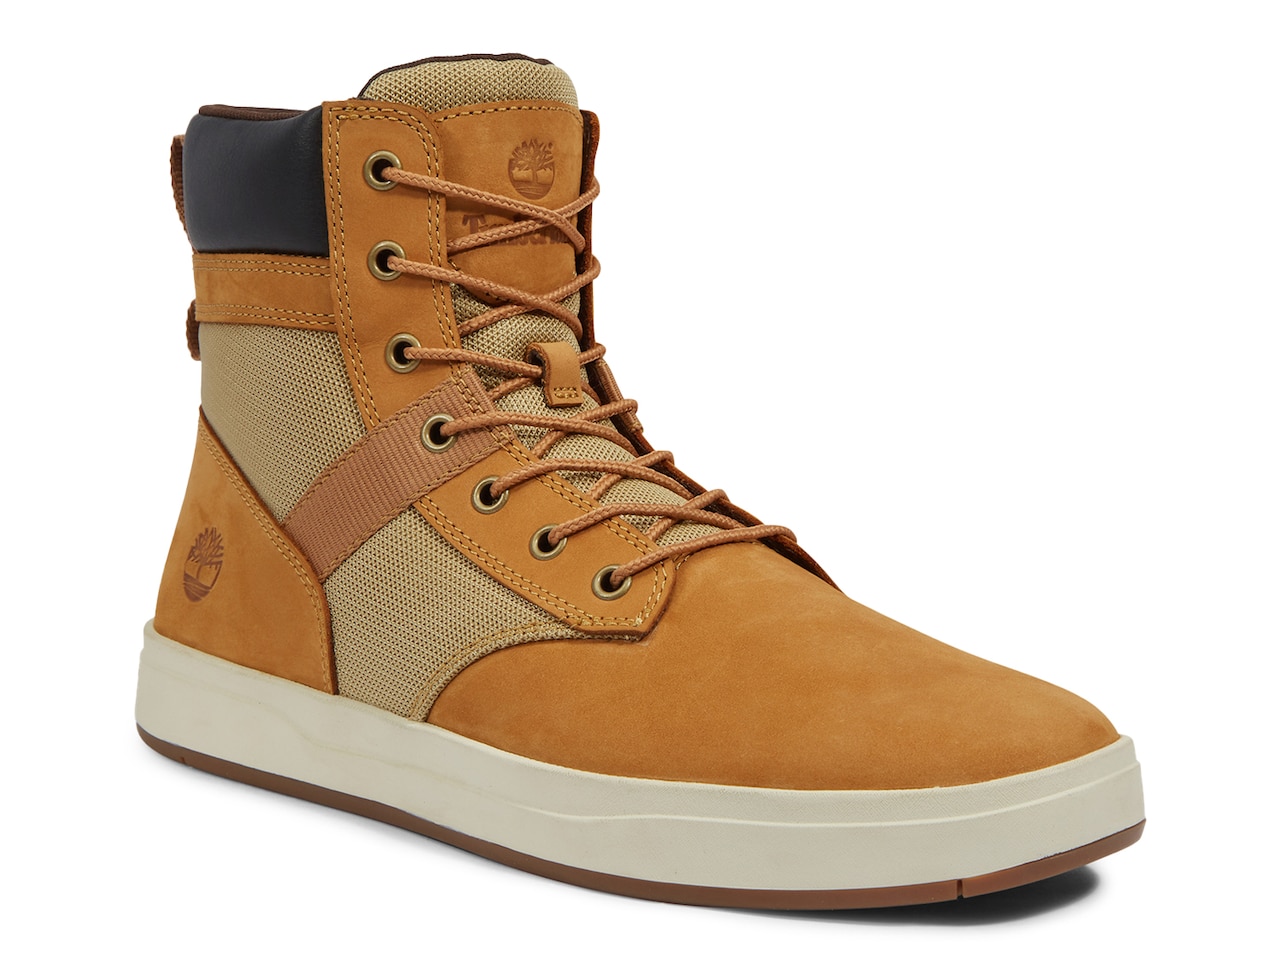 Timberland Men's Davis Square Boots (Tan) $35 + Free Shipping